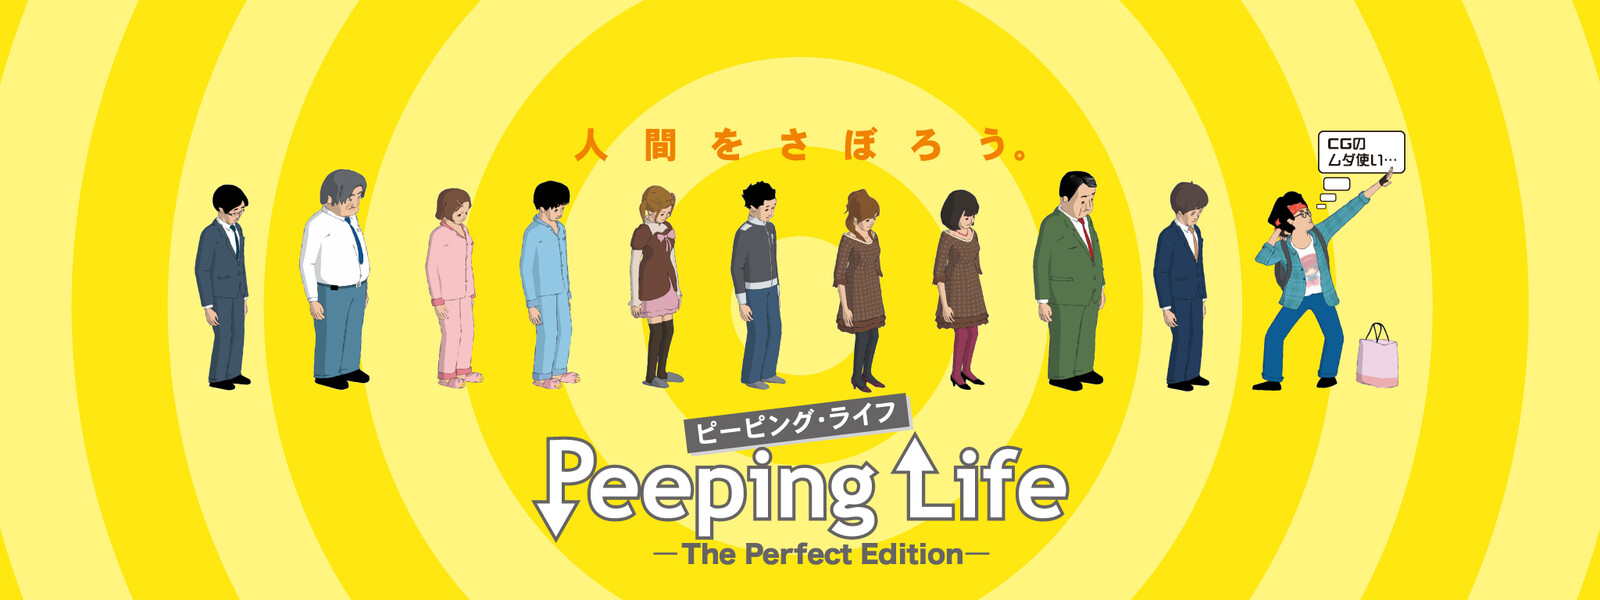 Peeping Life (ピーピング･ライフ) -The Perfect Edition- イエロー盤の動画 - Peeping Lifex (ピーピング･ライフ) 怪獣酒場 かいじゅうたちがいるところ